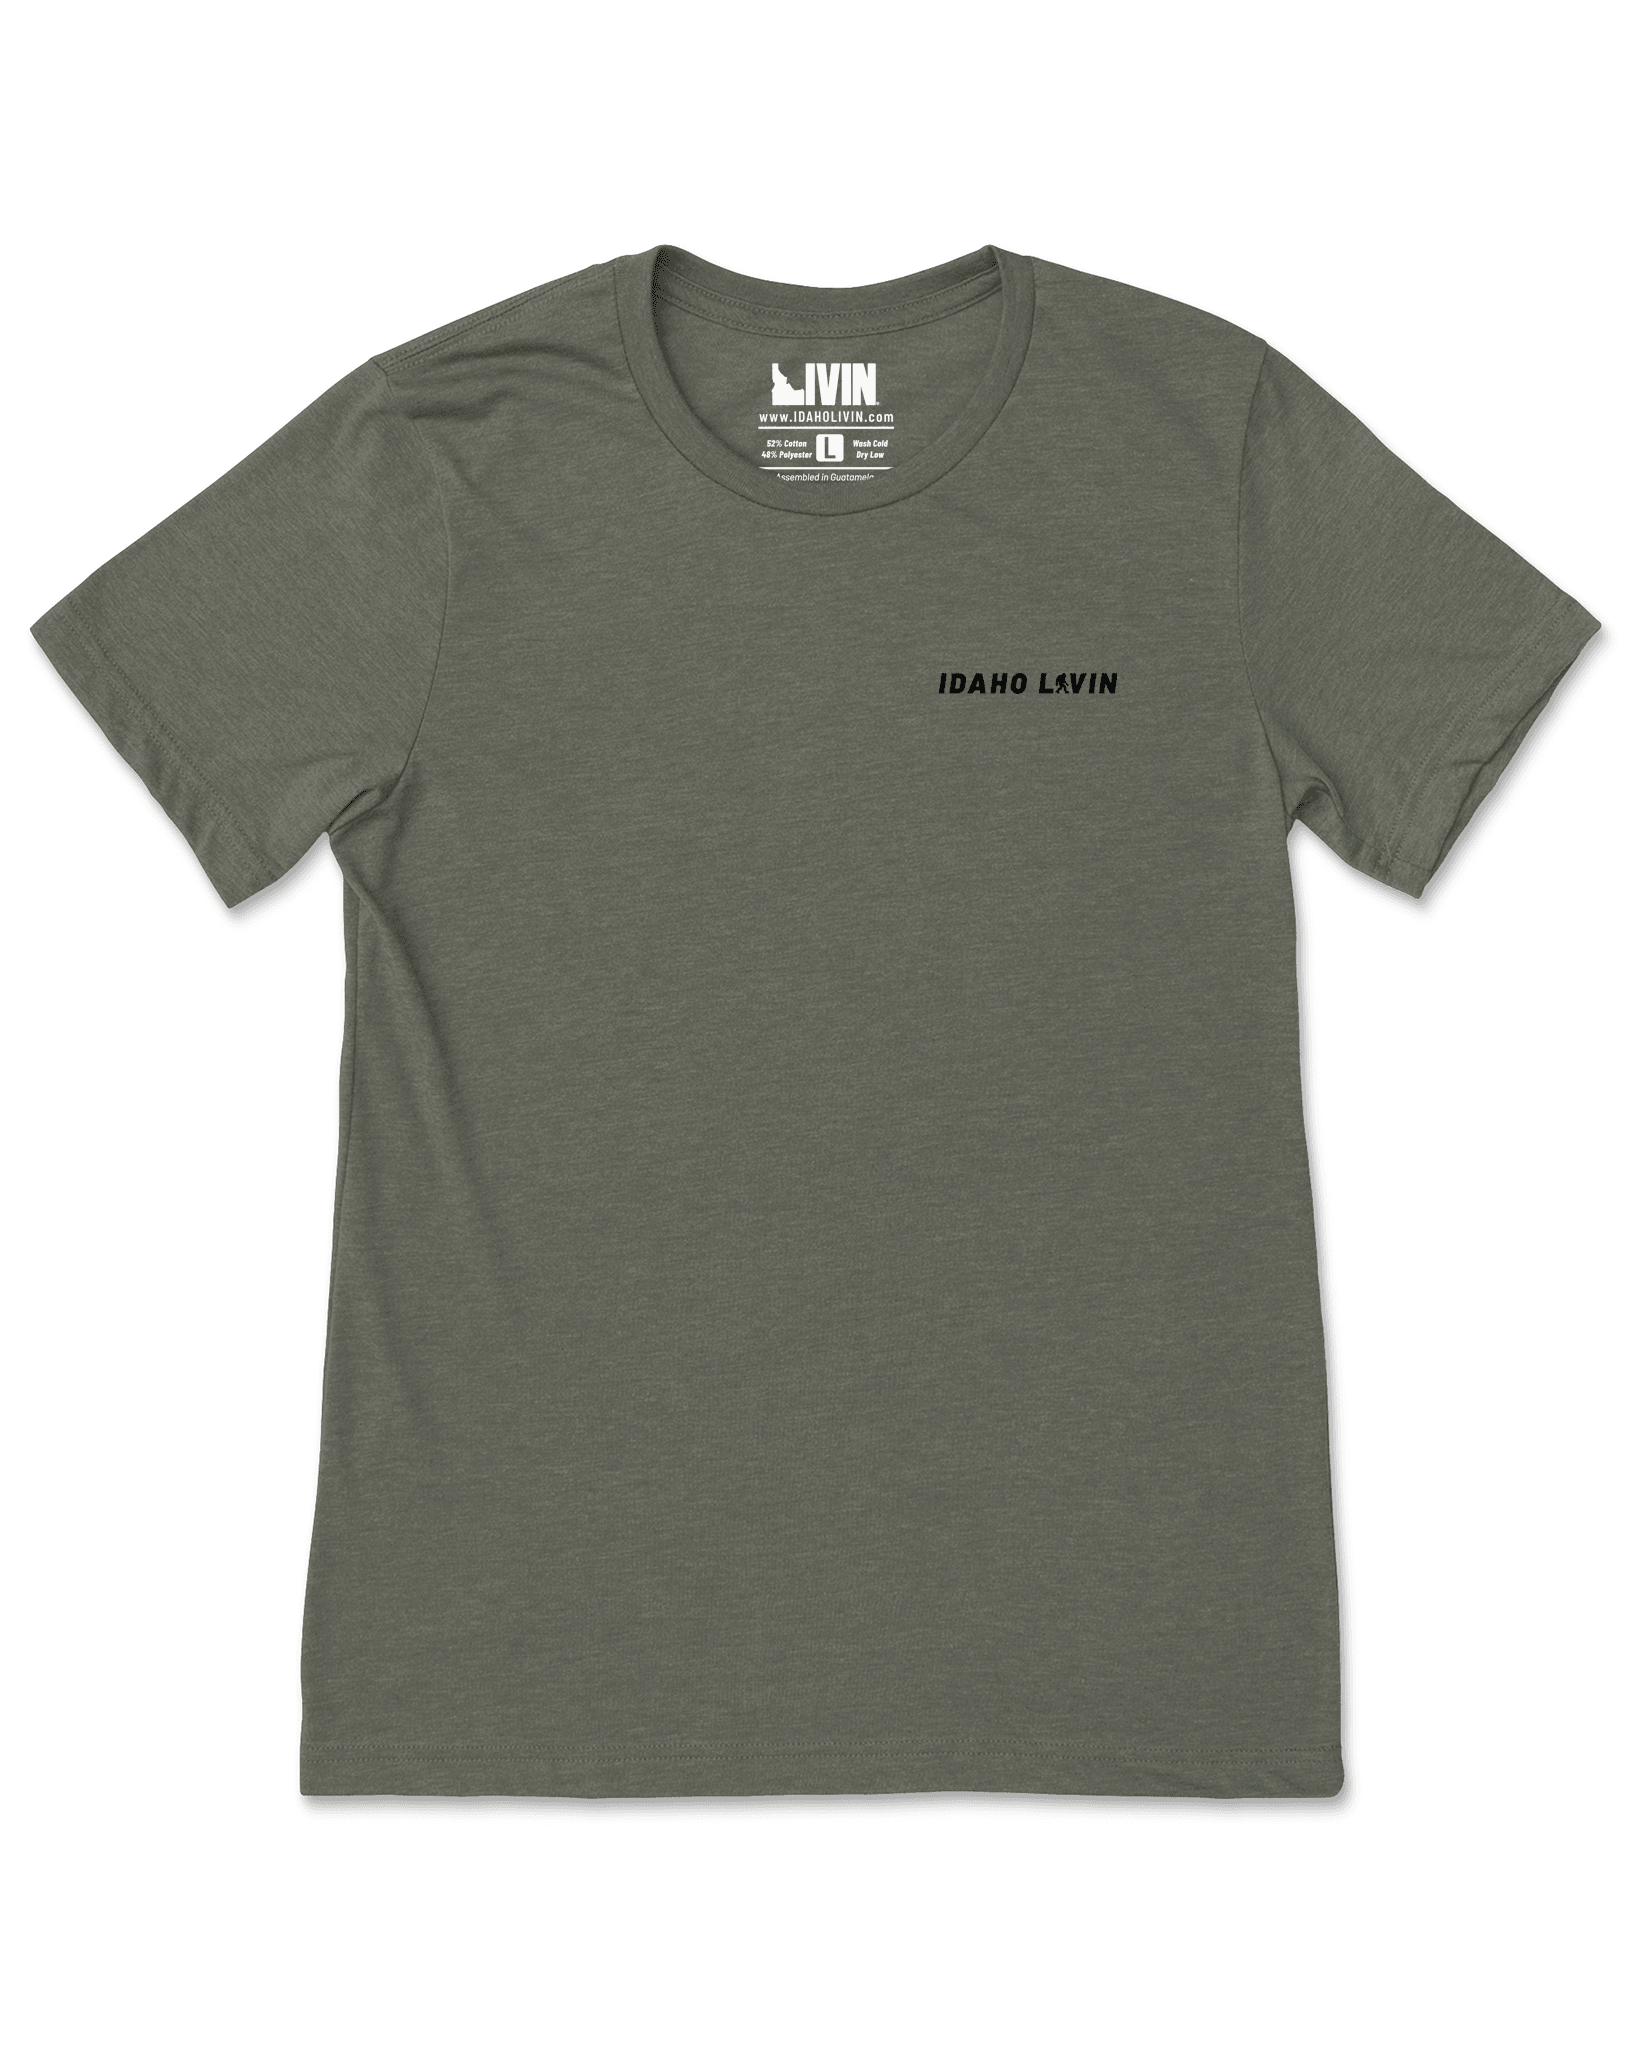 Unisex Sasquatch T-Shirt - Idaho Livin